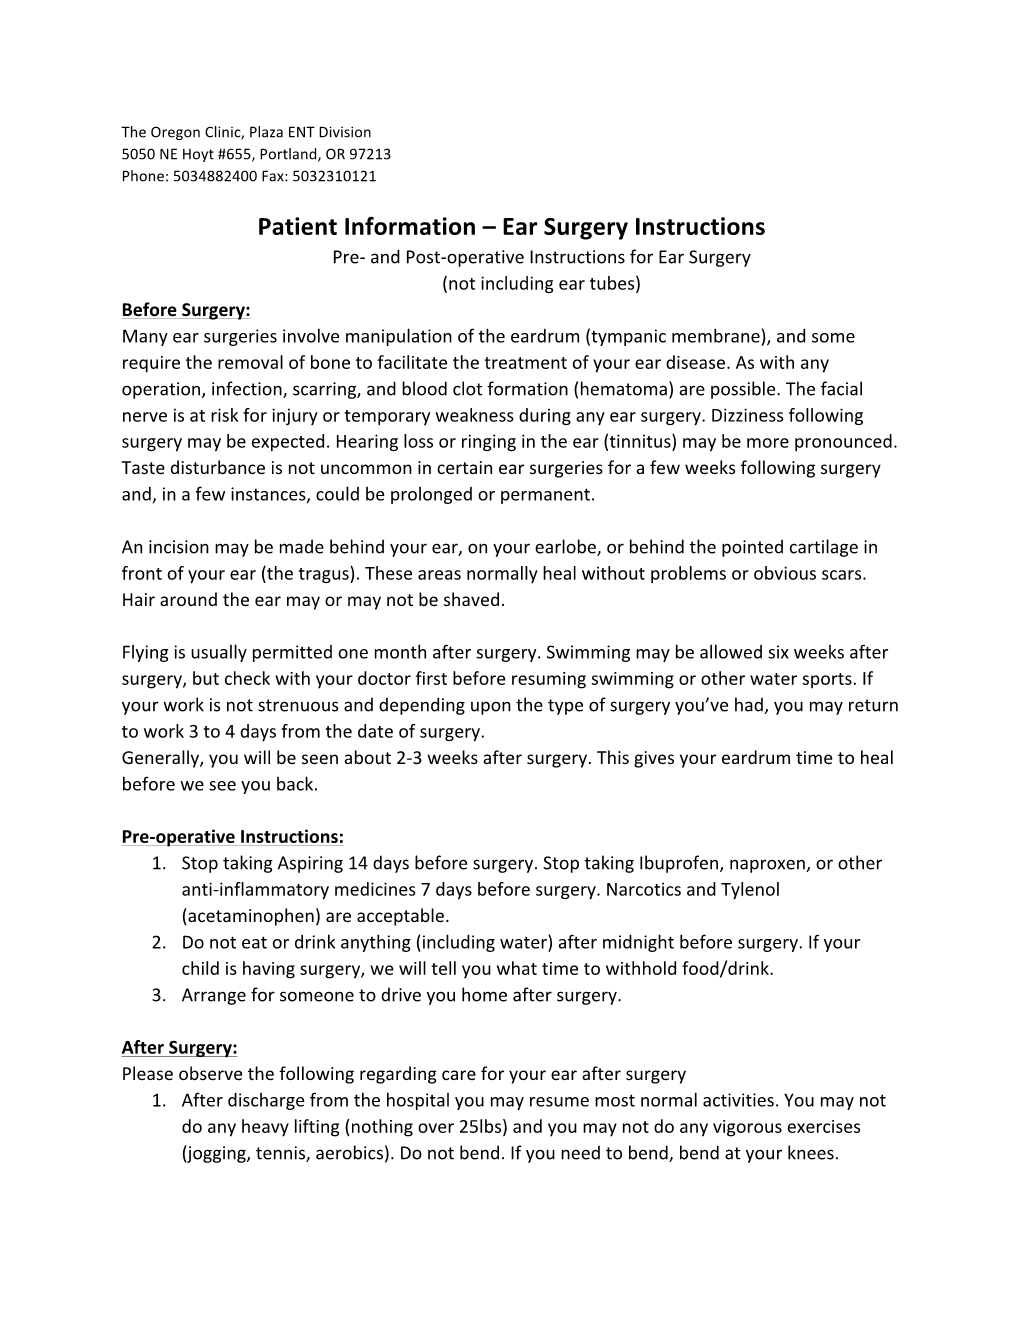 Patient Information – Ear Surgery Instructions